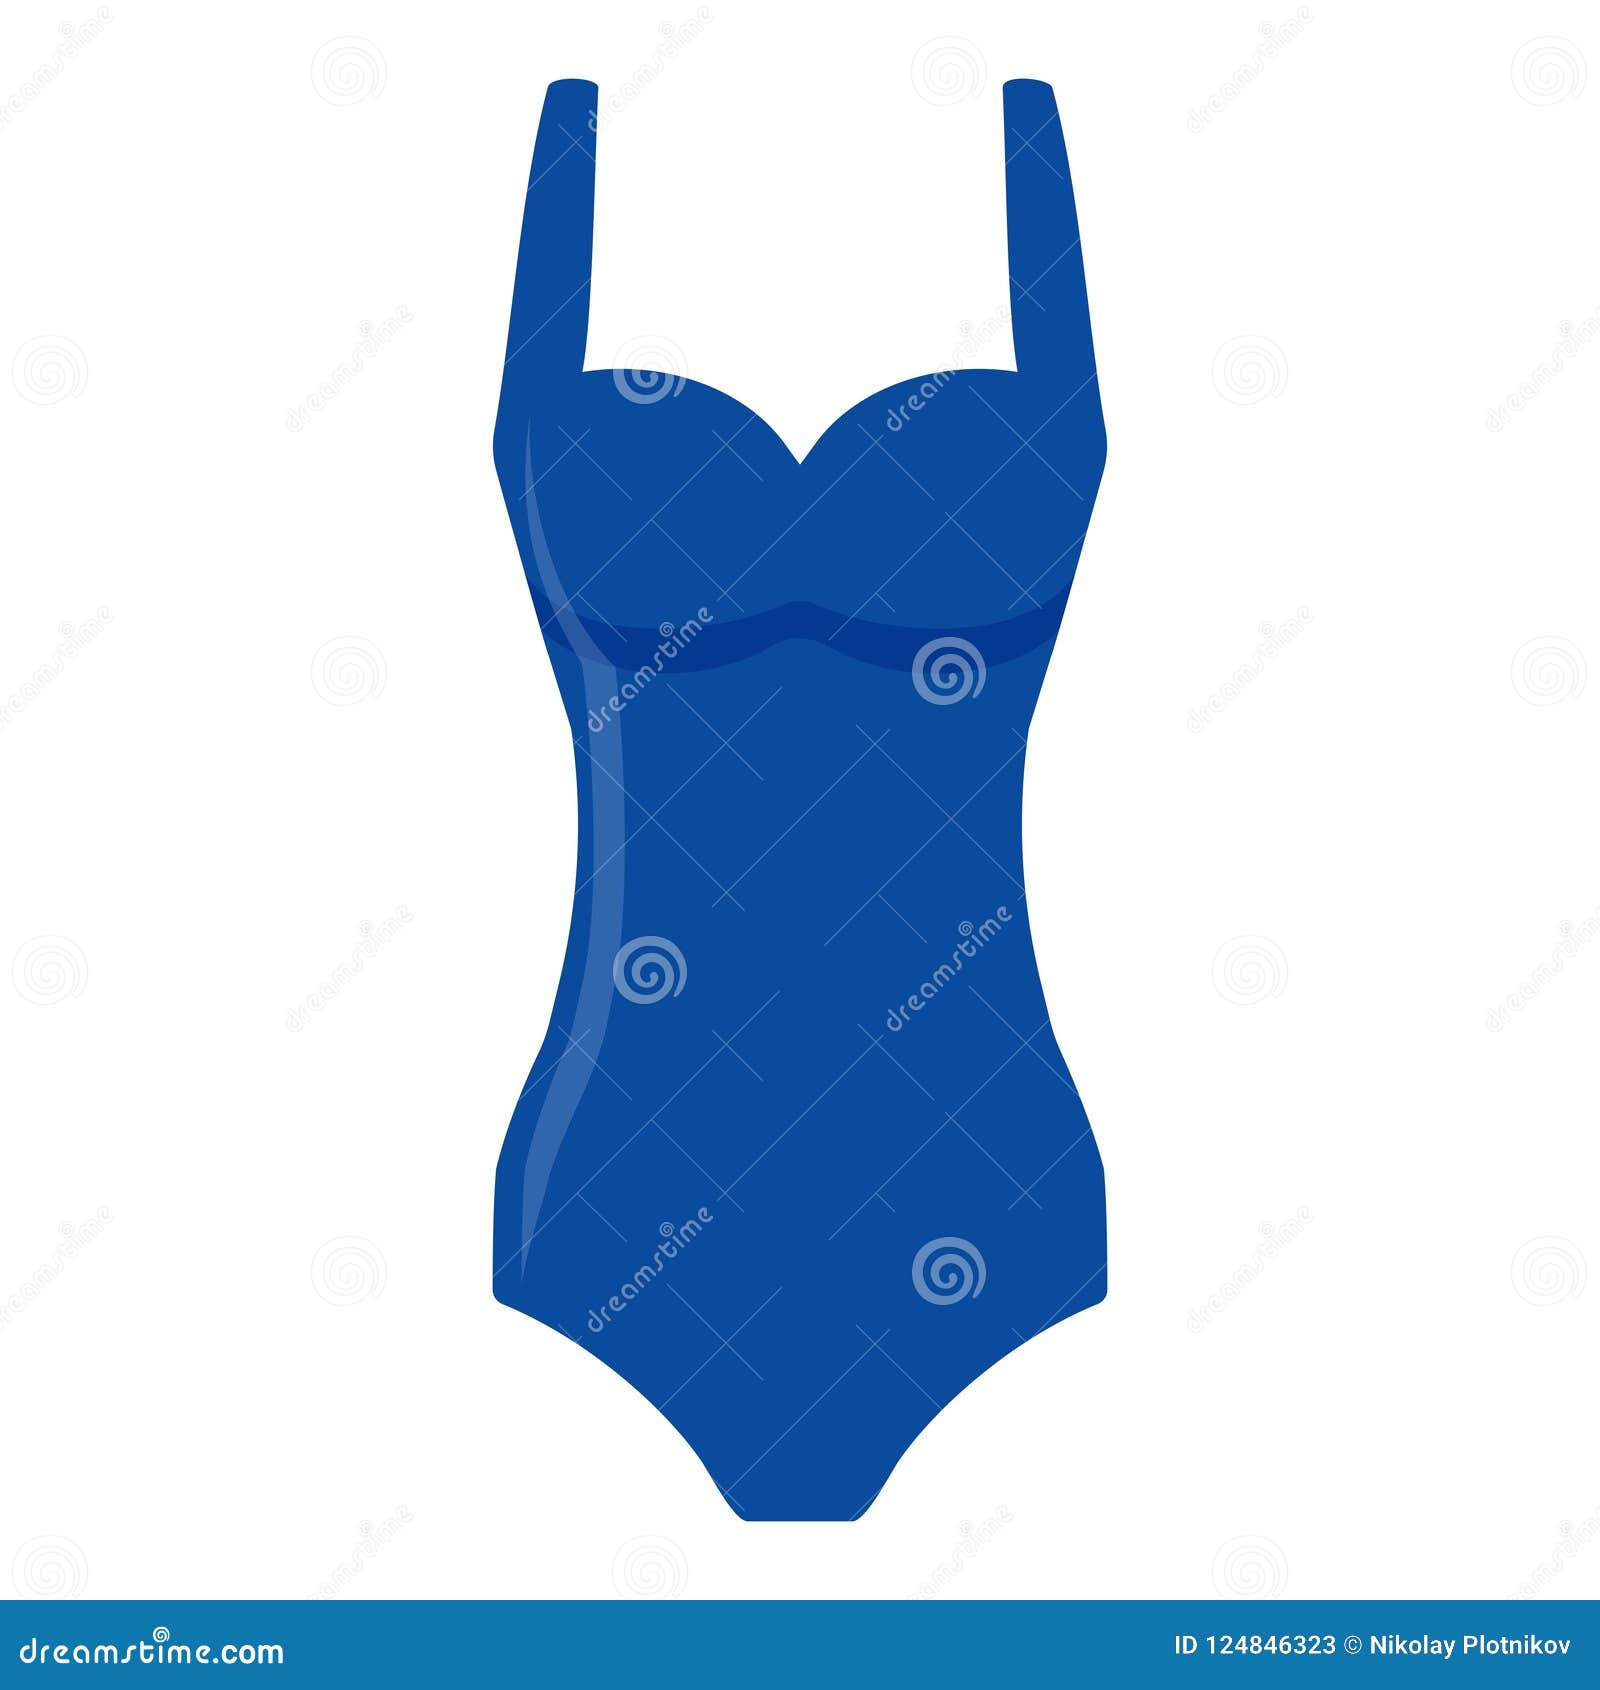 Free Vectors | Illustration of light blue bikini